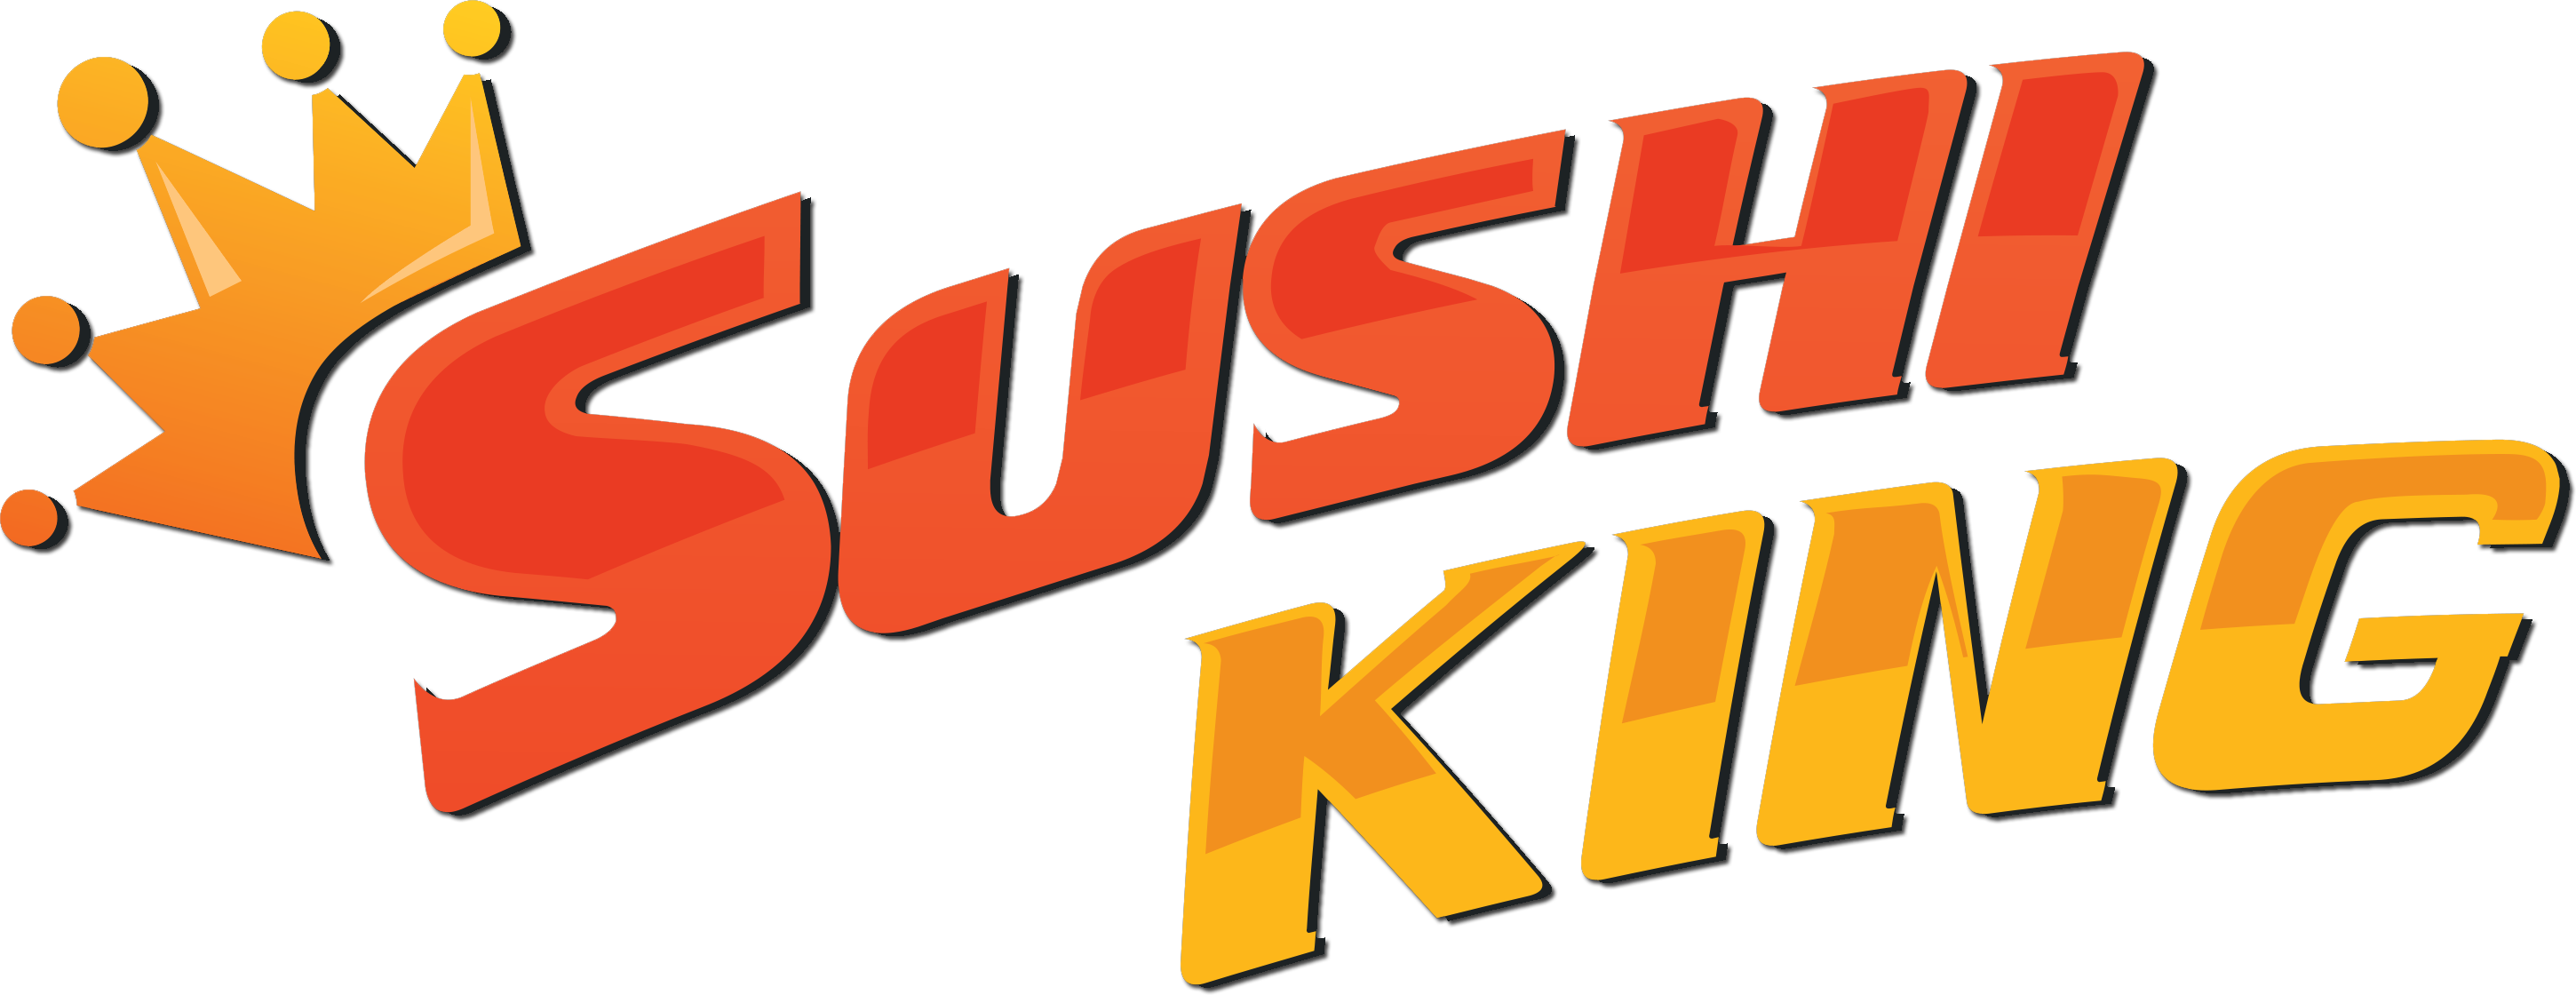 SushiKing Logo